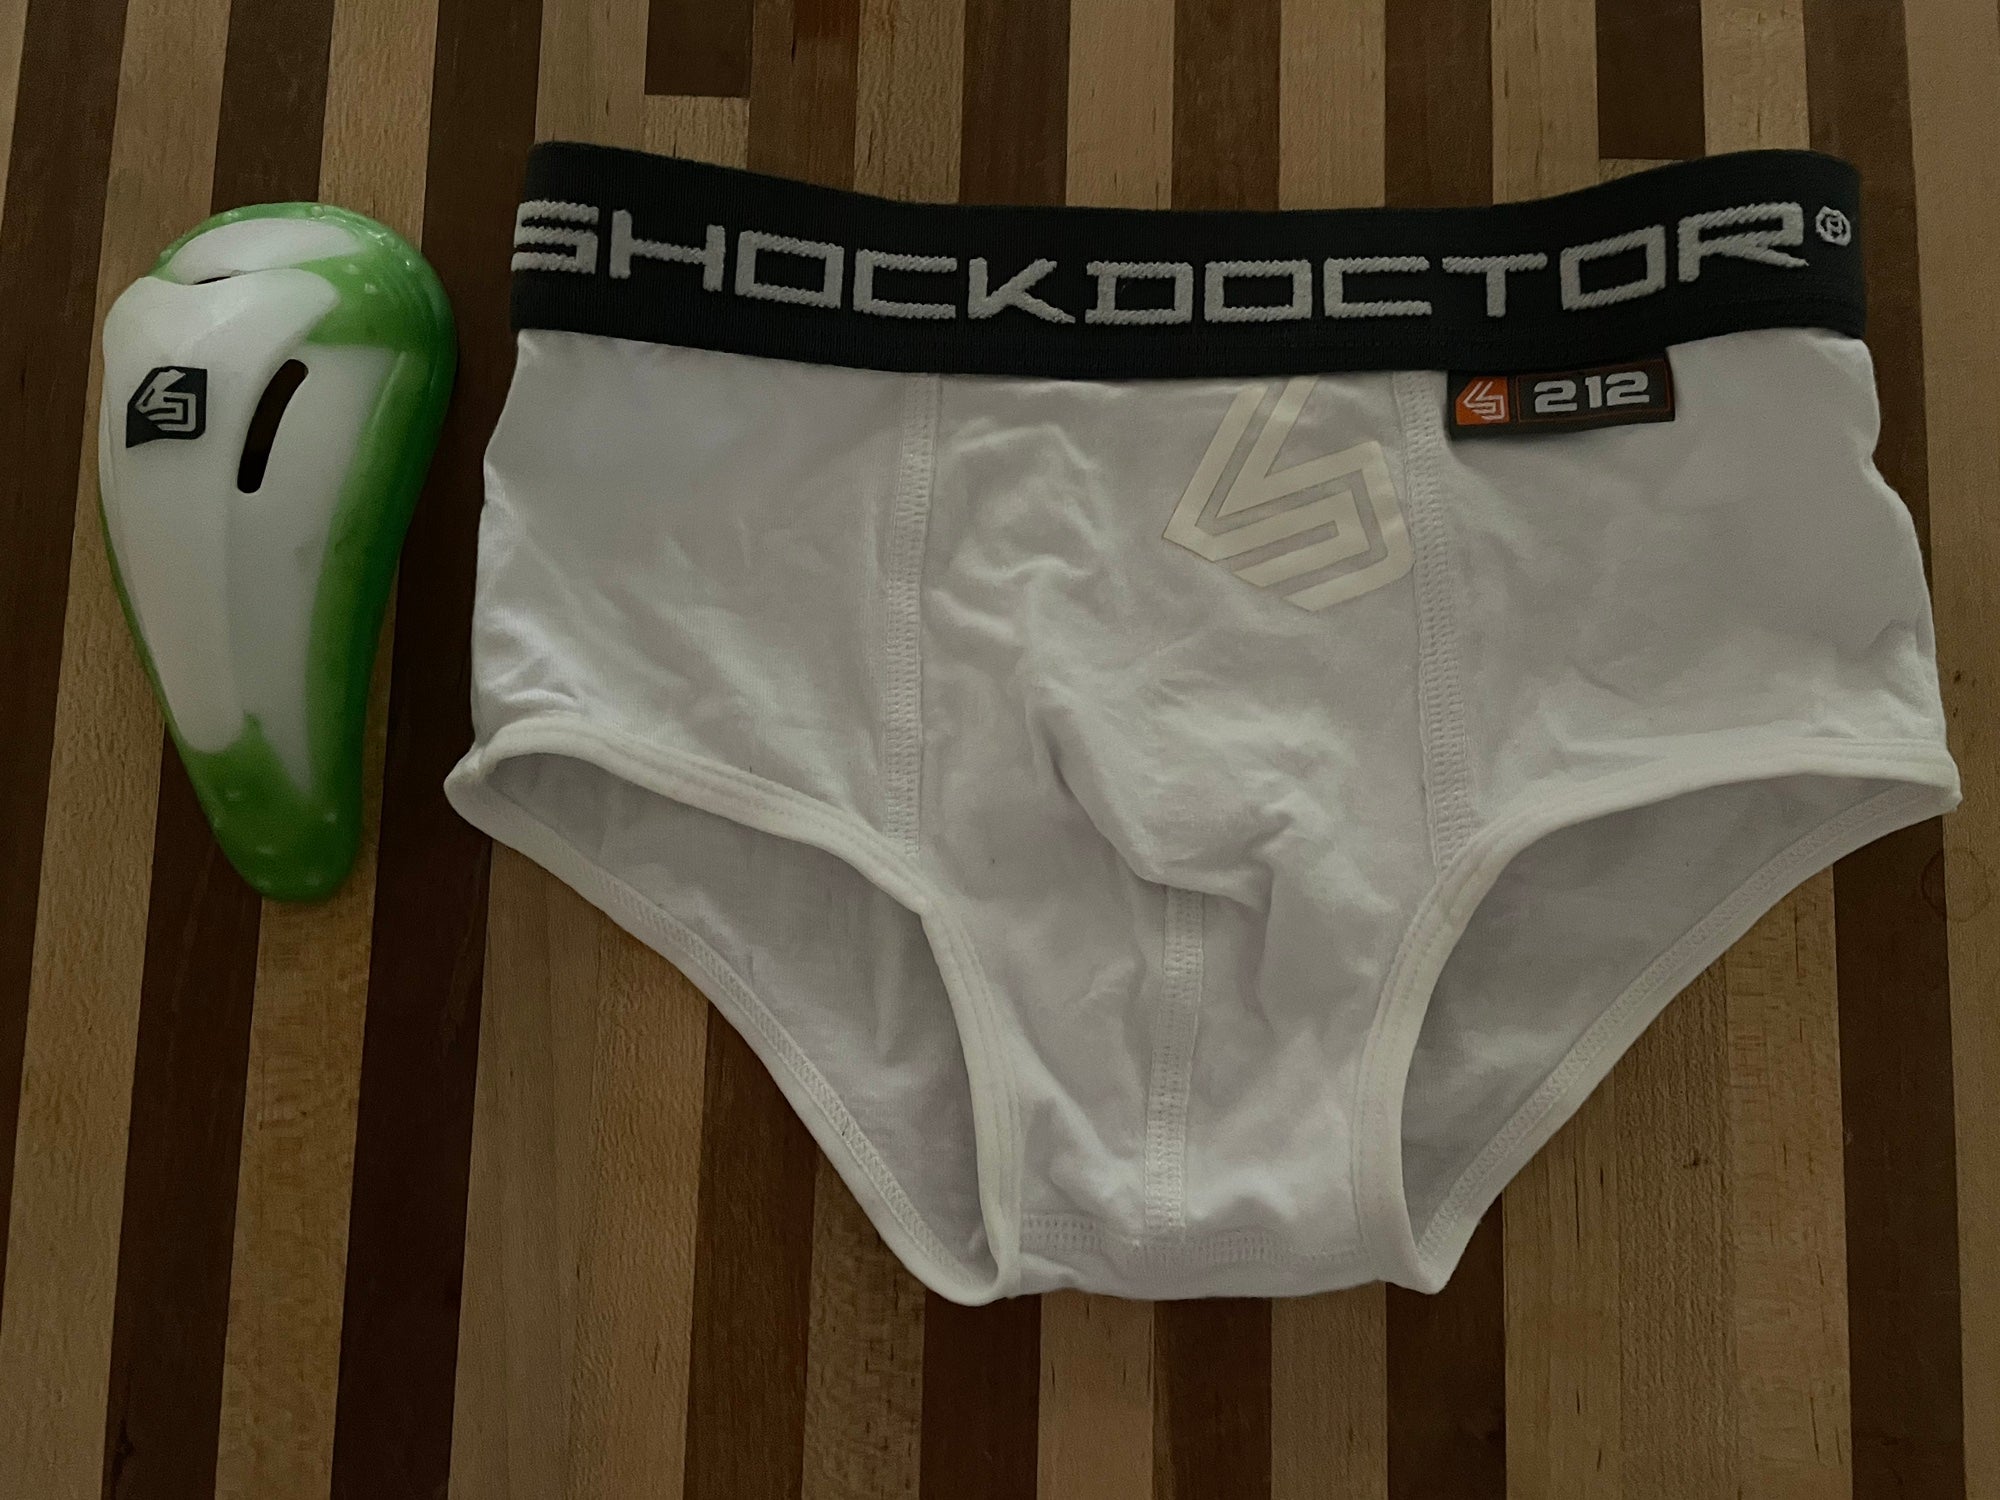 Shock Doctor 212 / jock strap briefs / boys xsmall / preowned